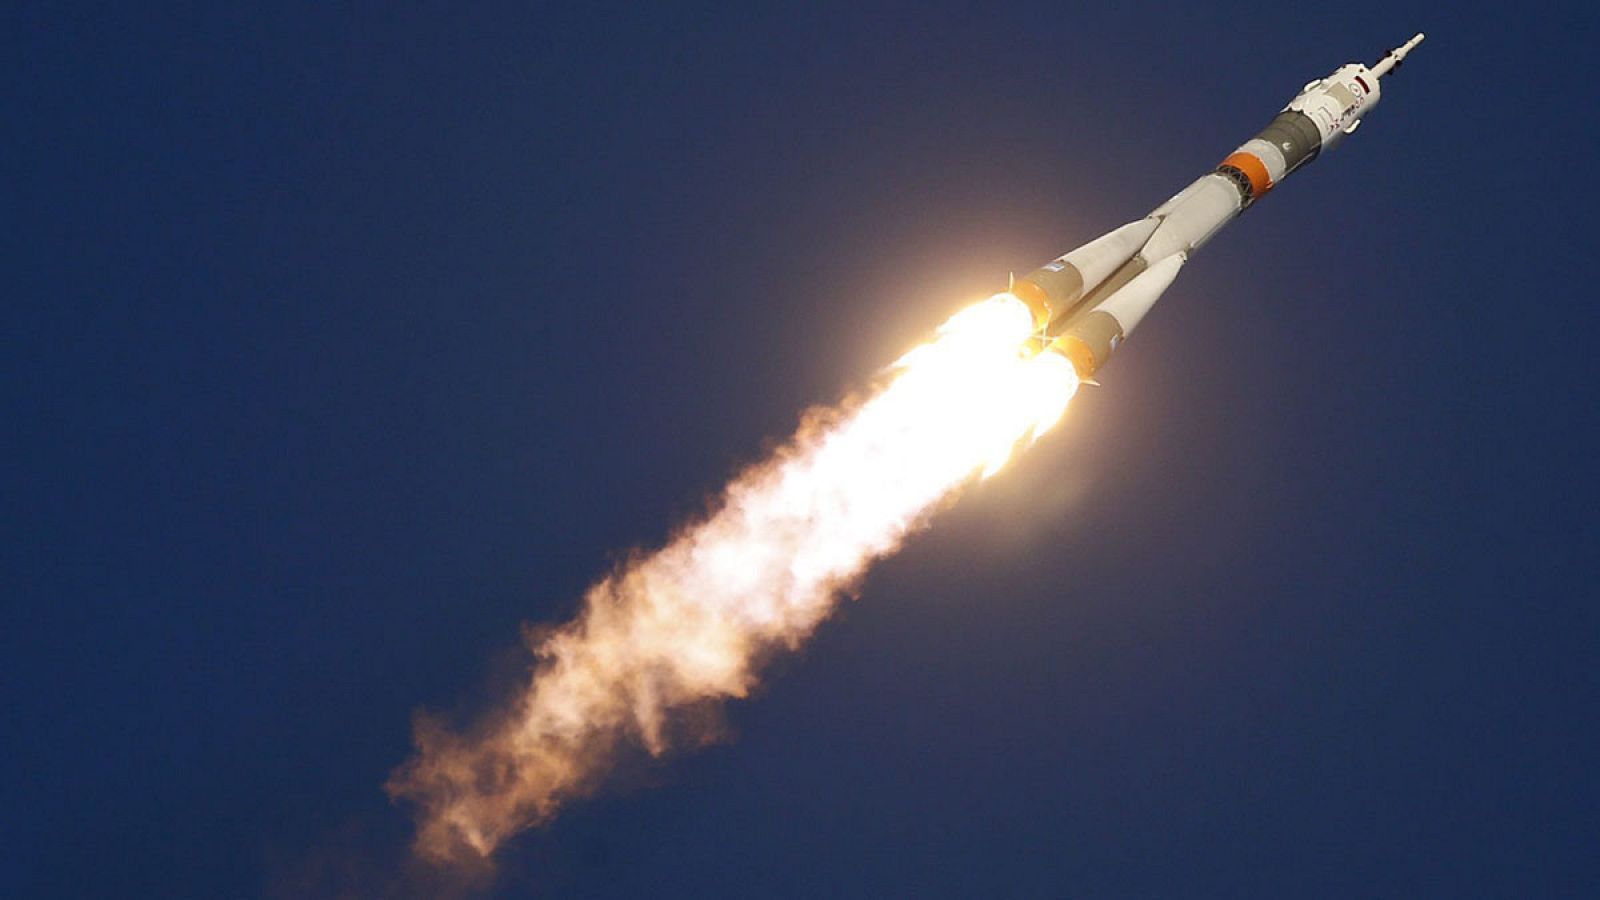 La nave rusa Soyuz TMA-19M ha sido lanzada desde el cosmódromo de Baikonur, Kazajistán.